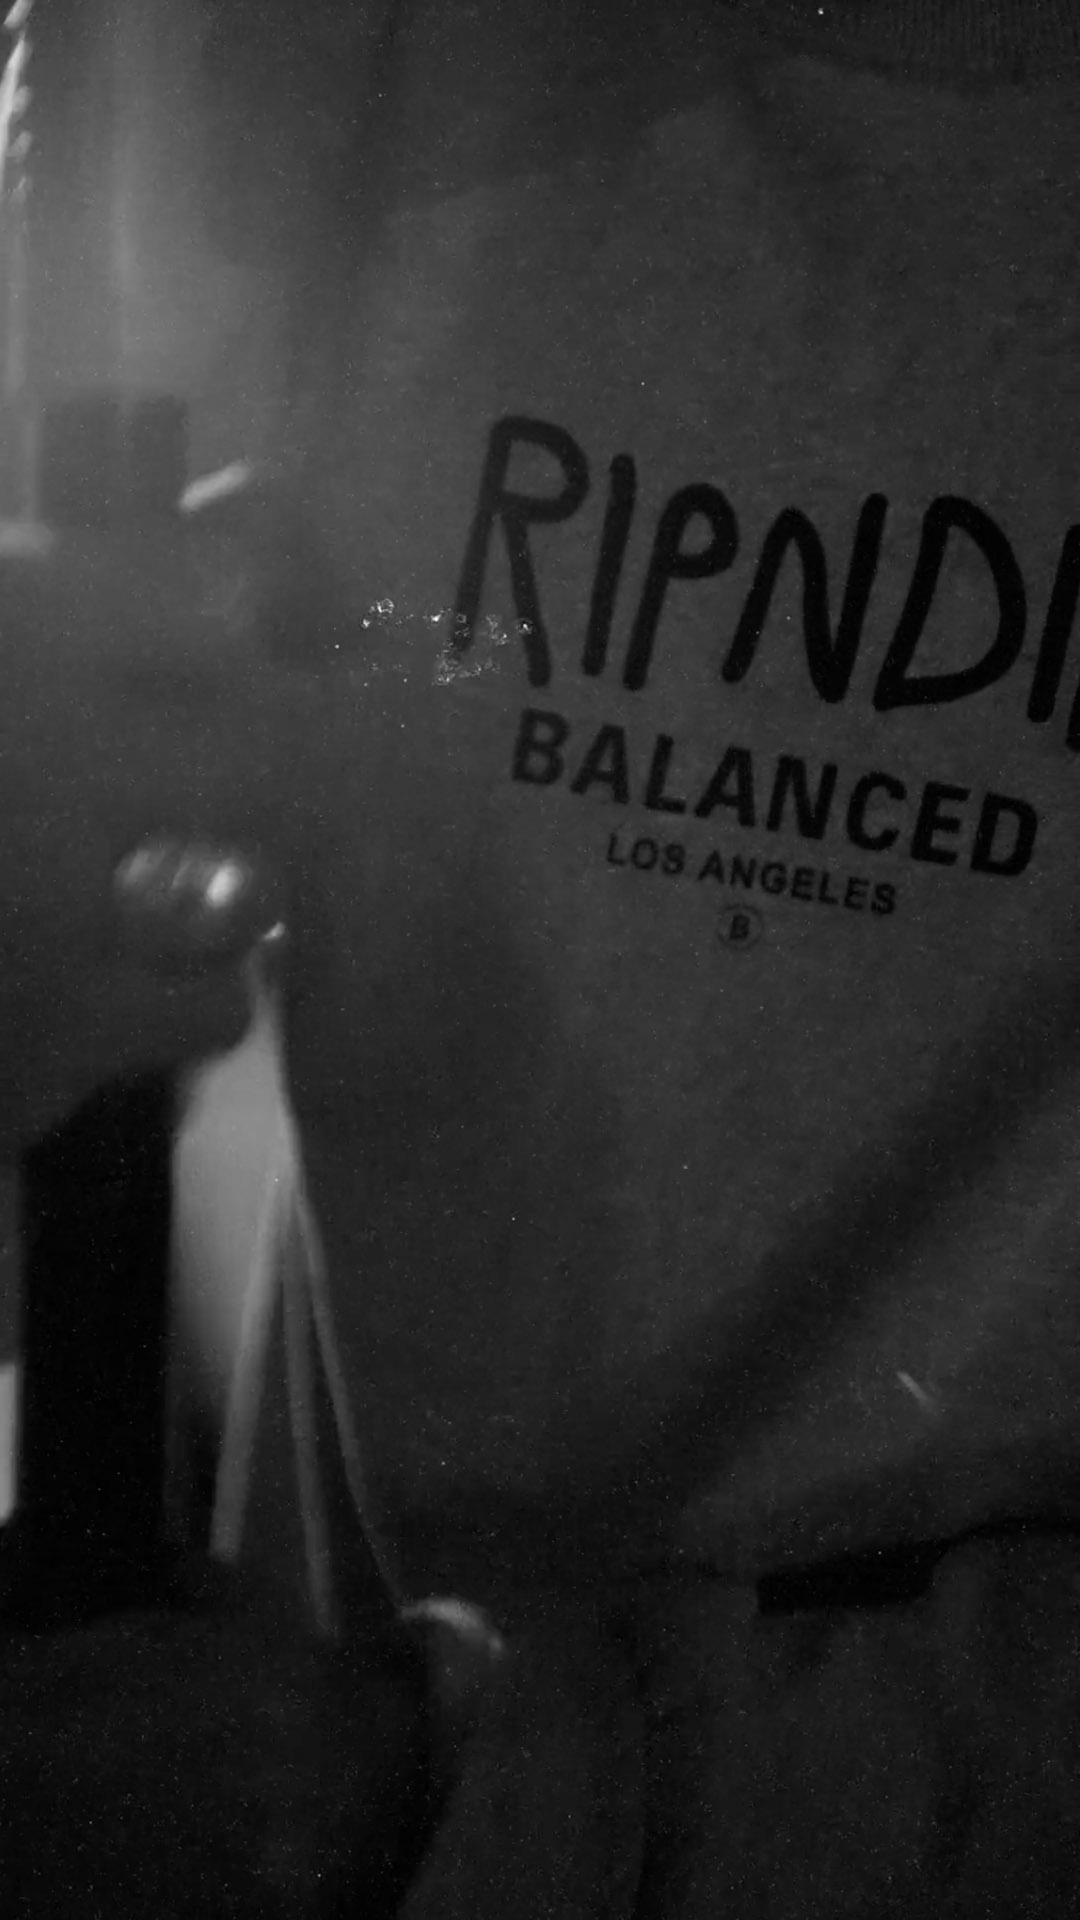 Vertical Promo RipNDip BALANCED Los Angeles